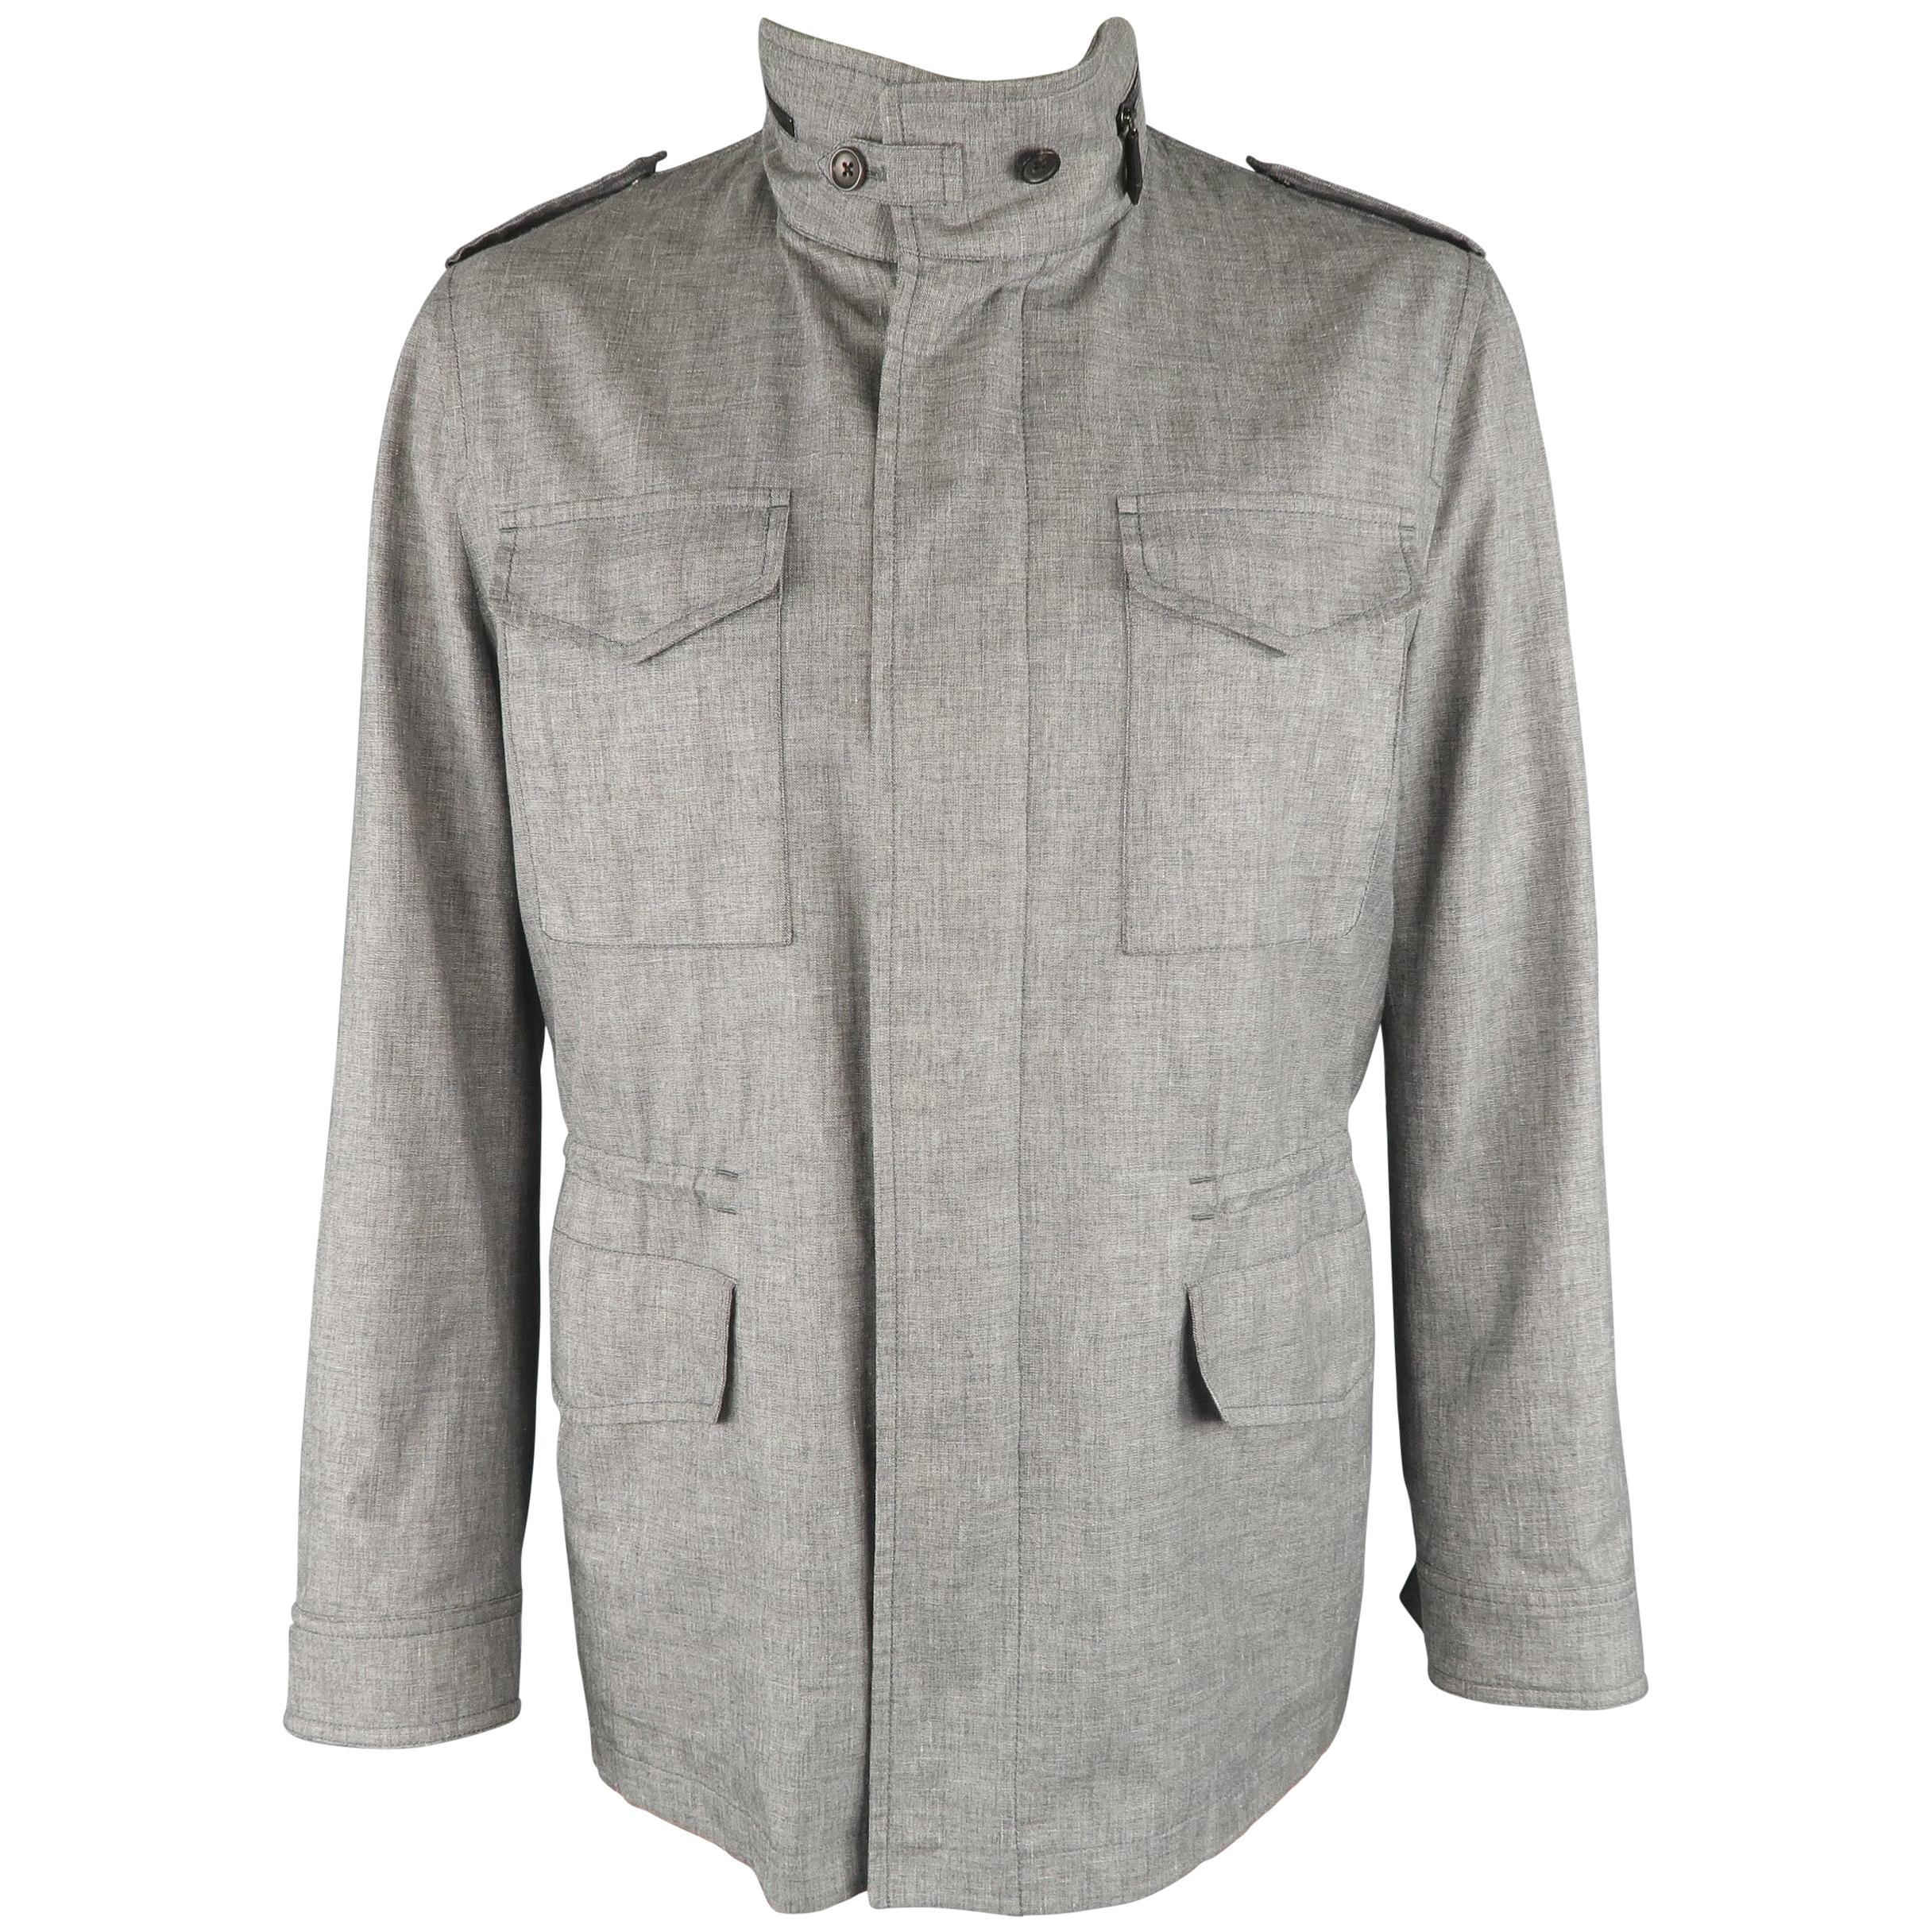 TOM FORD 46 Heather Gray Linen / Wool / Silk Parka Jacket Coat